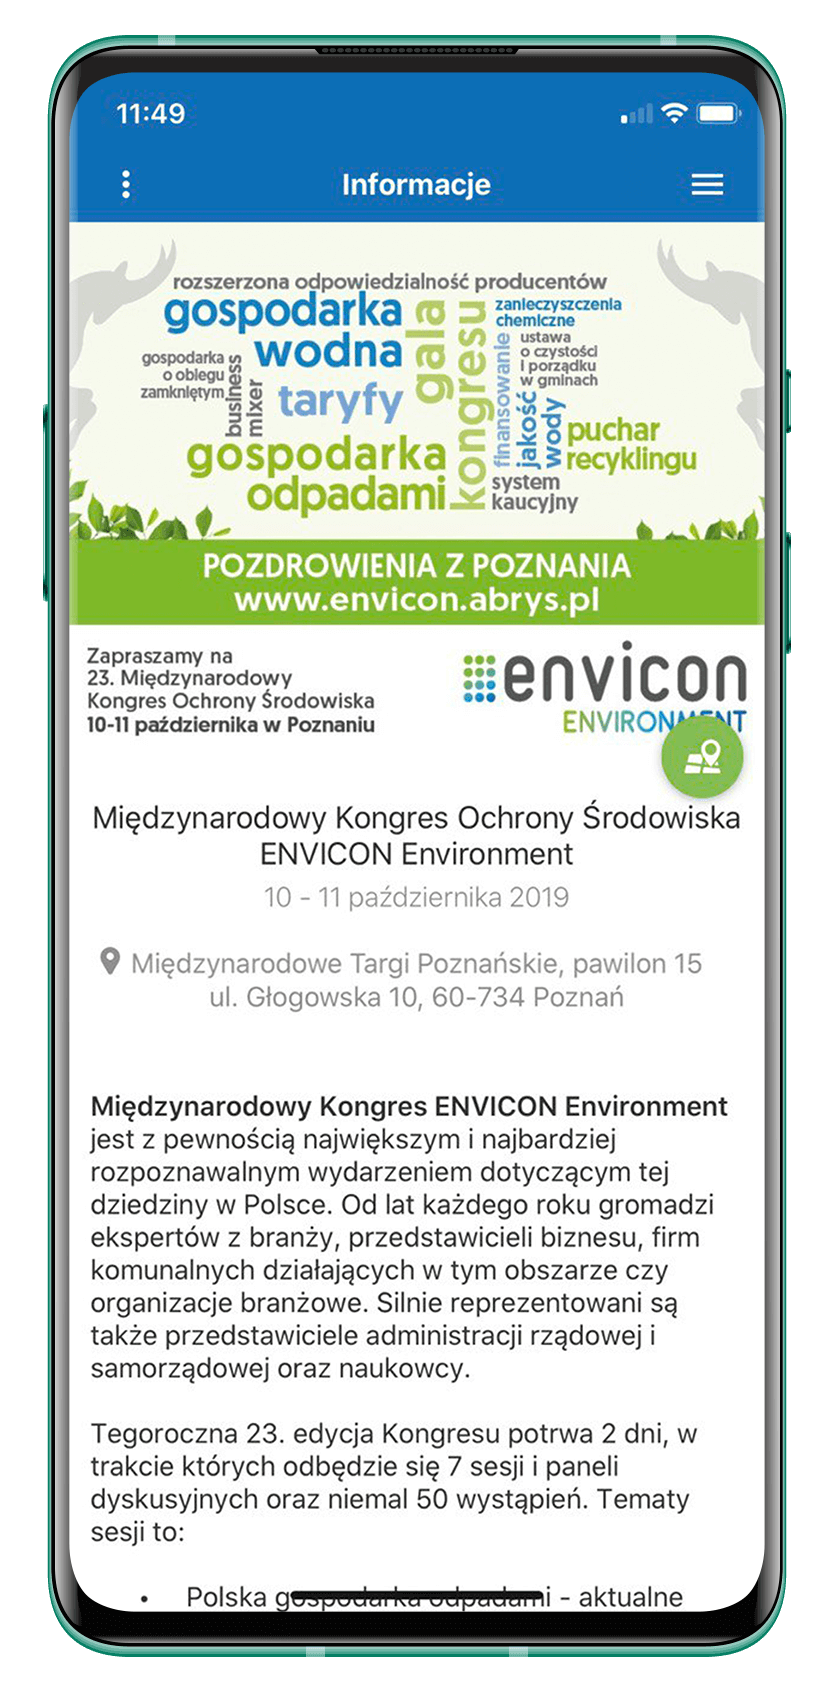 The International Congress of Environmental Protection ENVICON